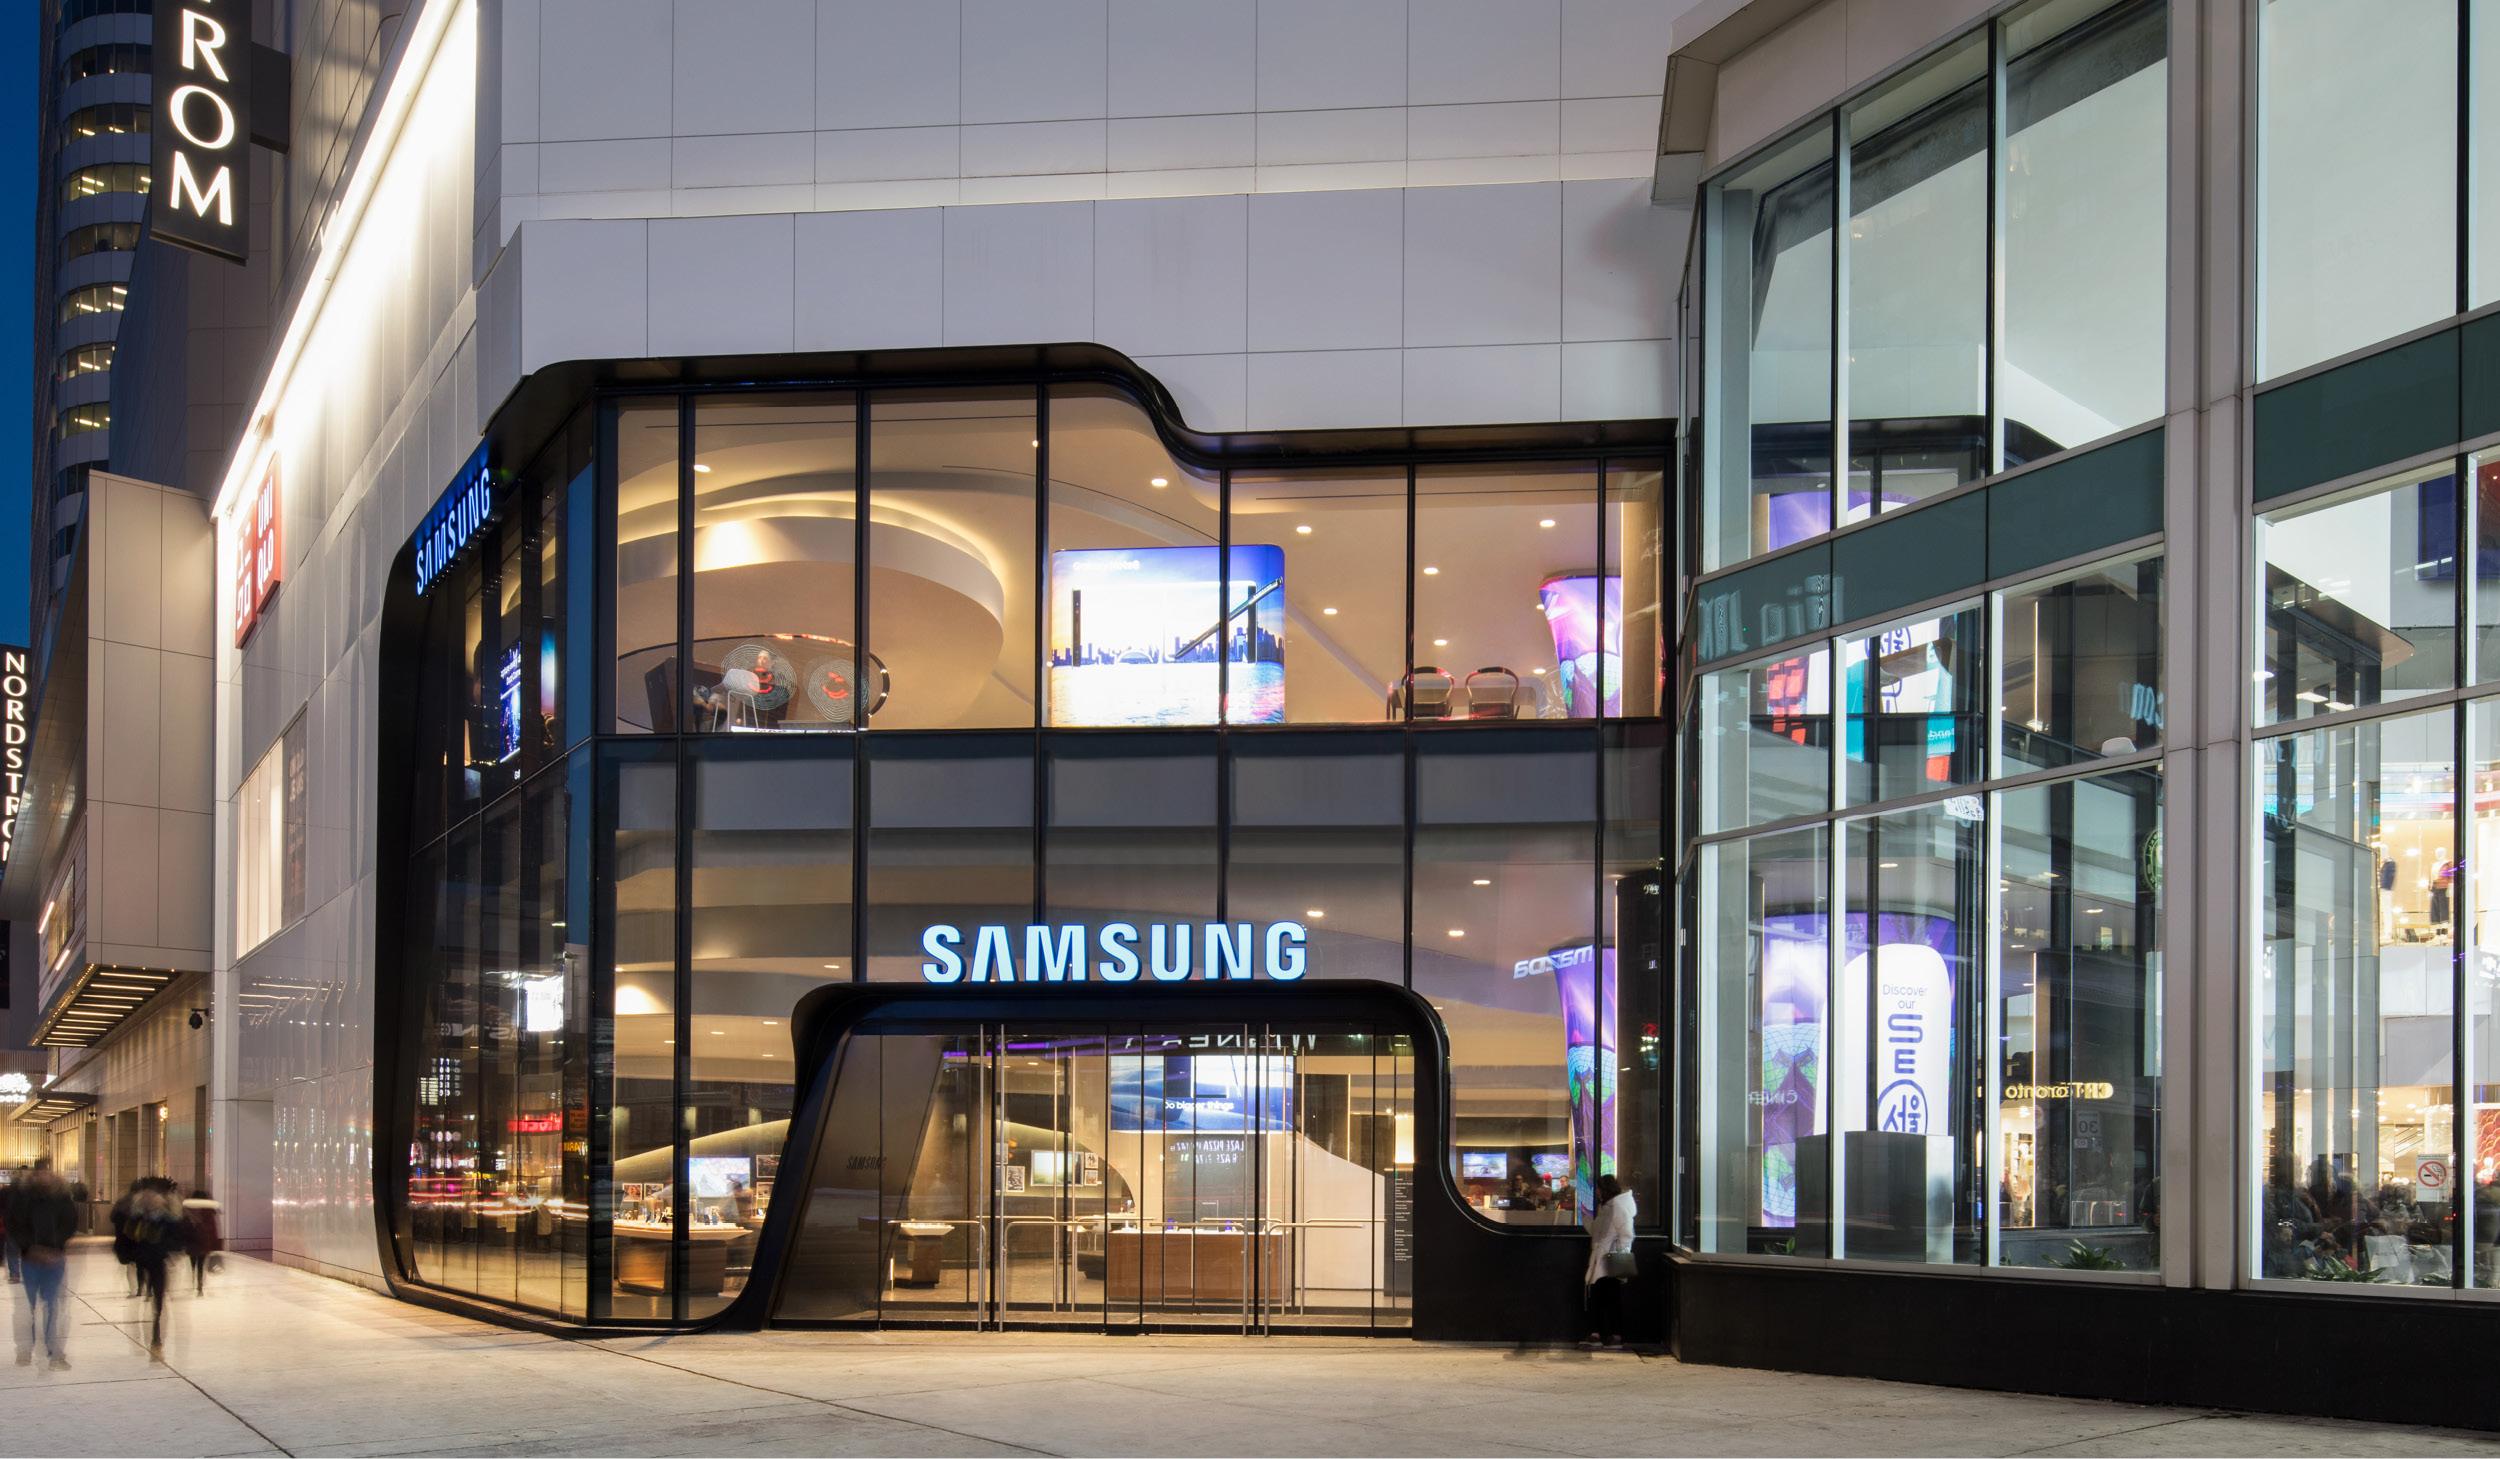 Samsung store at Sherway Gardens by Cutler, Toronto – Canada